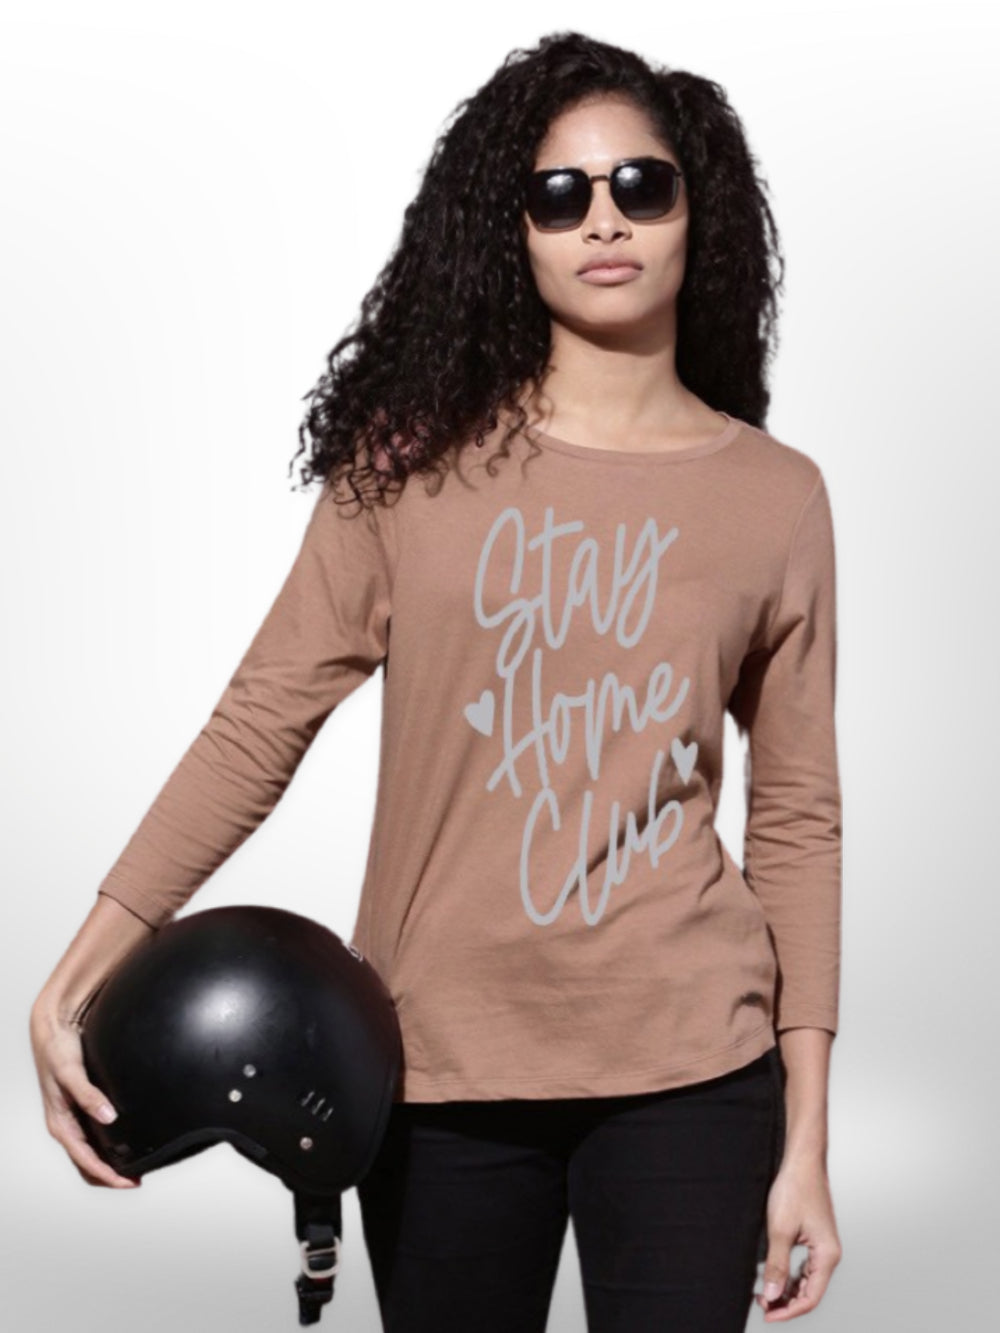 Home Club Printed 4Quarter Sleeve T shirt - Legacy Boutiques